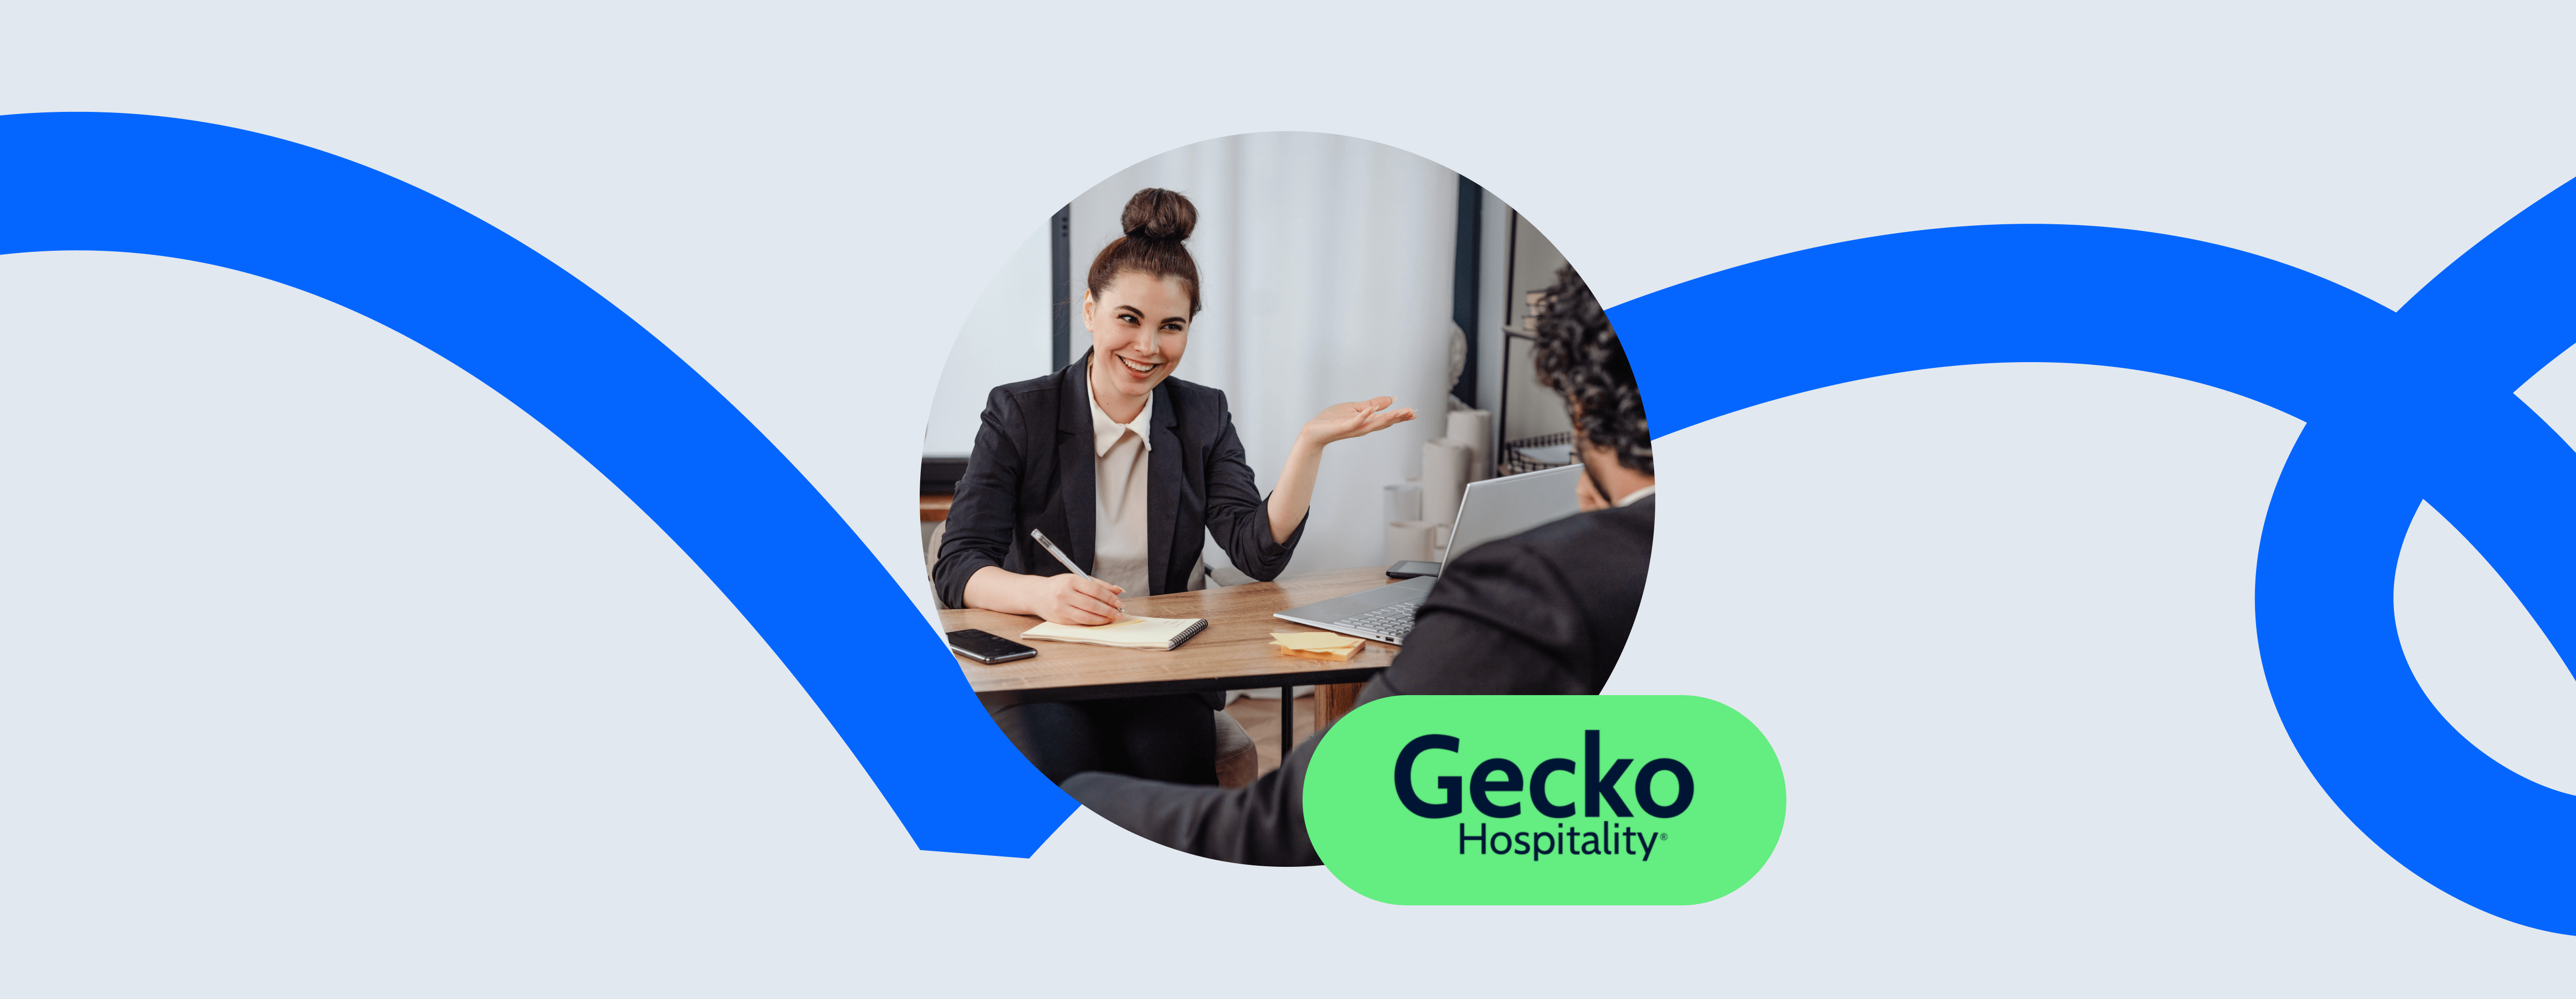 gecko hospitality case study cover image